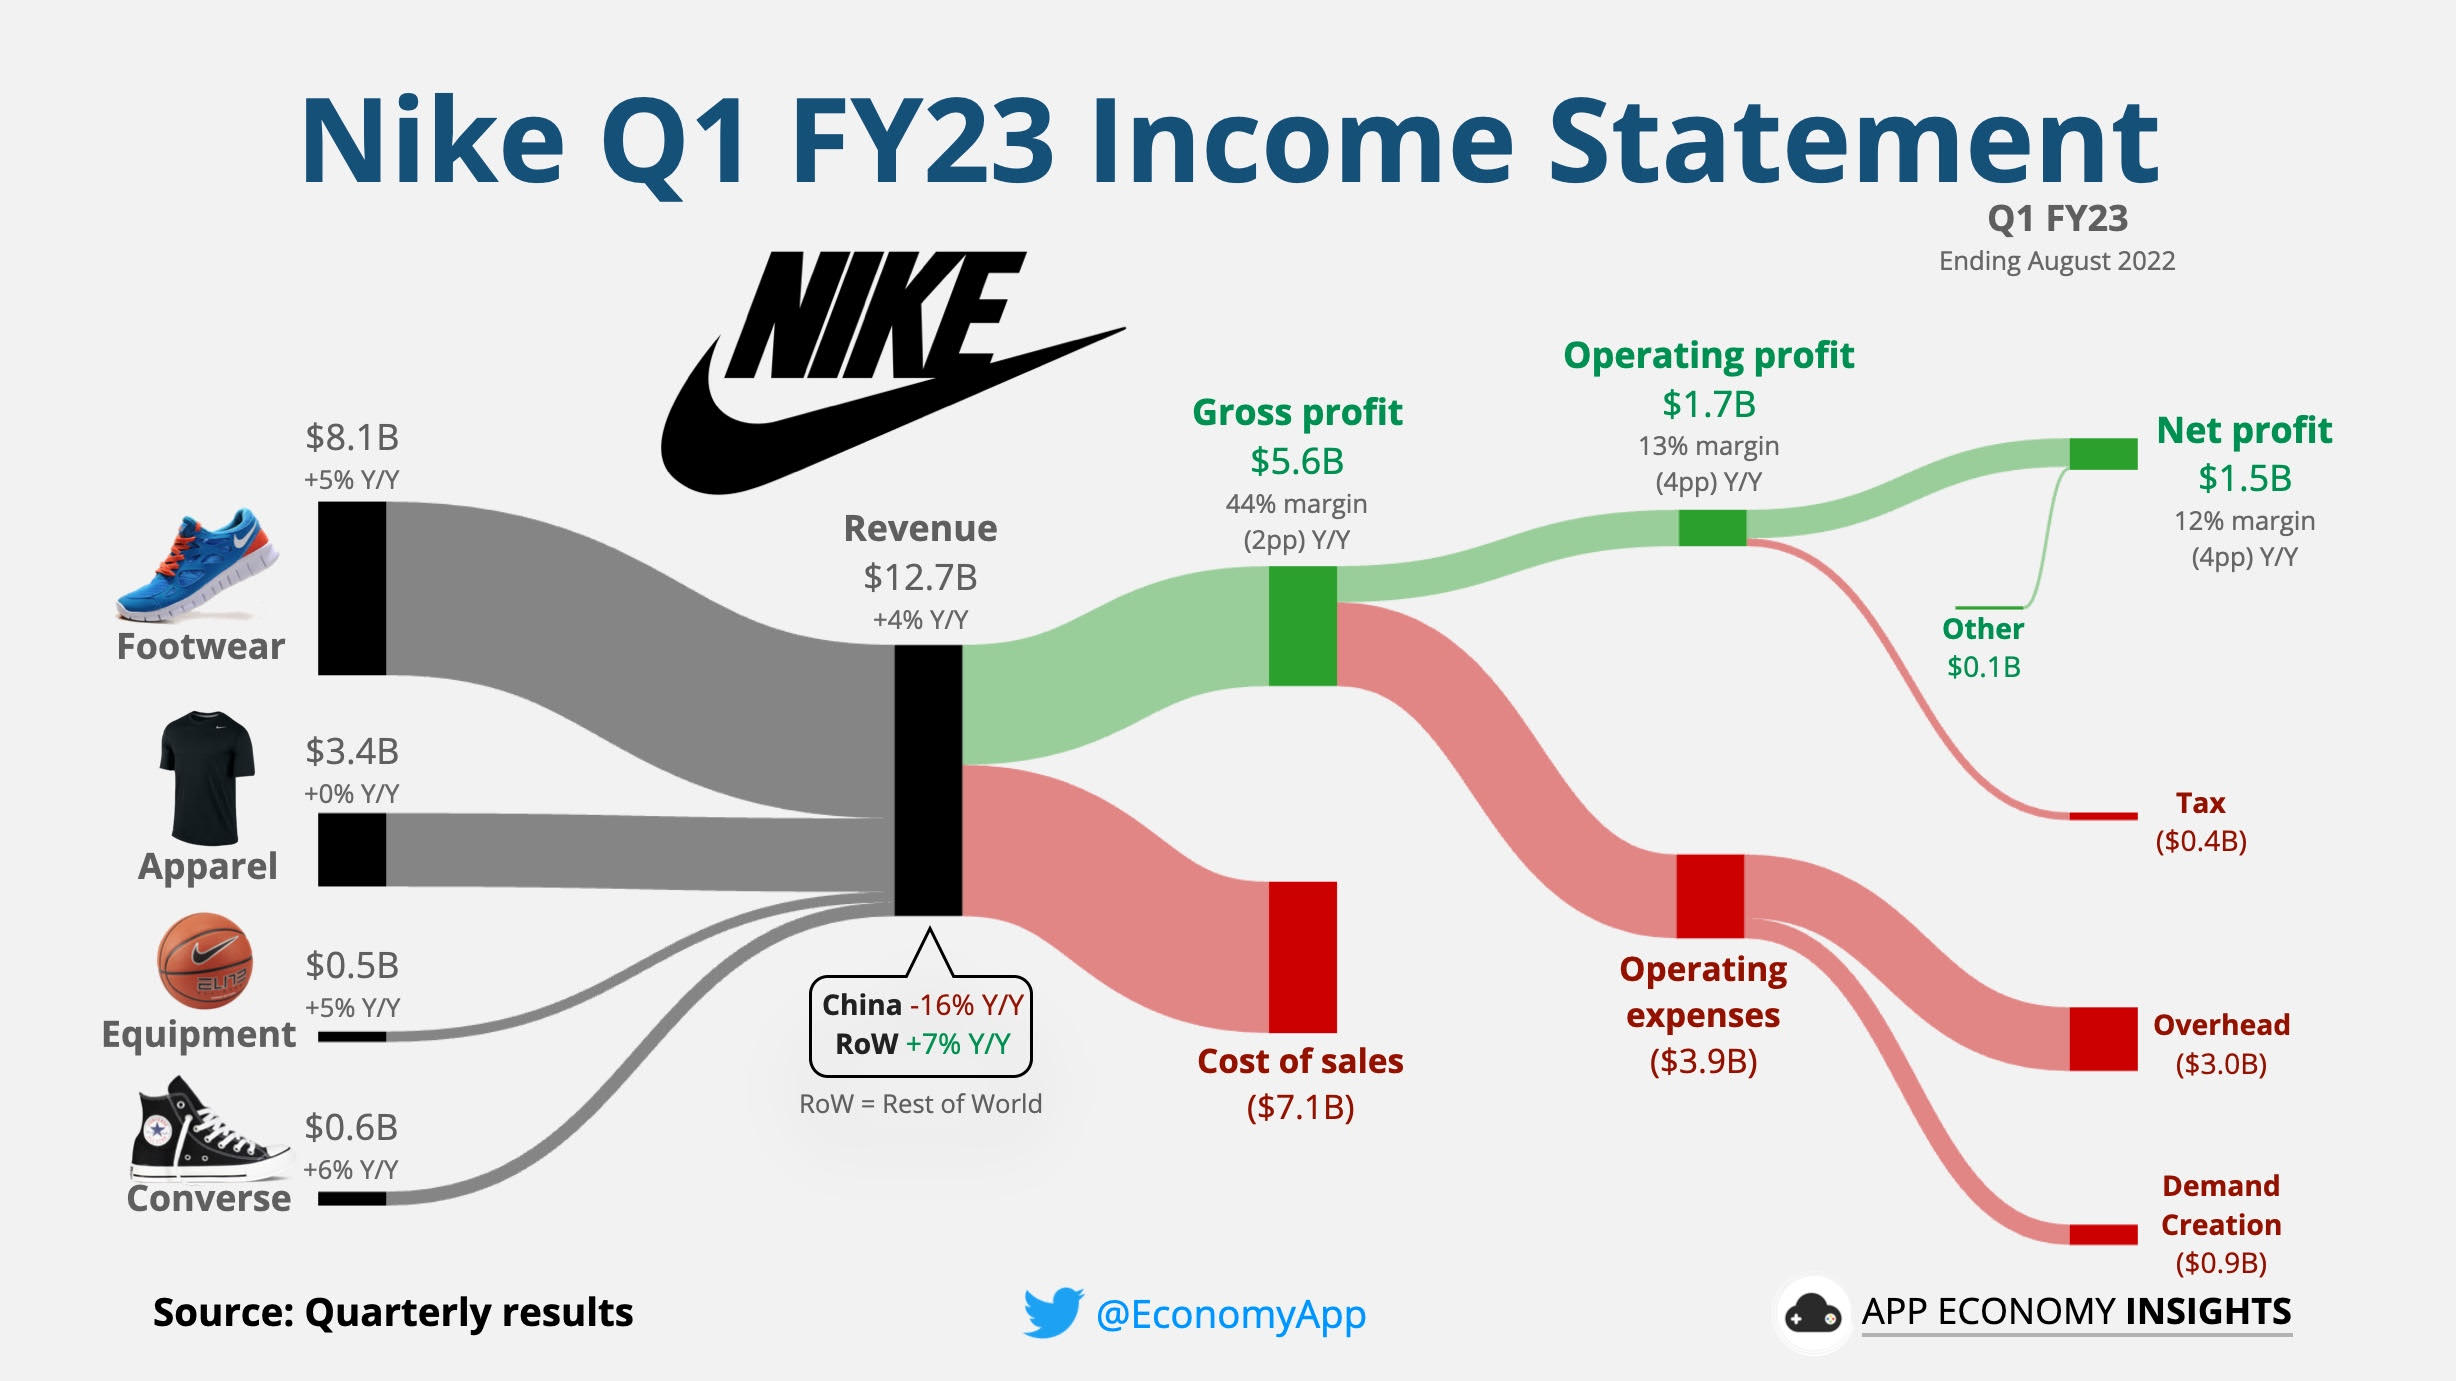 rural Egoísmo retirada App Economy Insights on Twitter: "$NKE Nike's Income Statement Q1 FY23.  https://t.co/lZcKDDyKAC" / Twitter